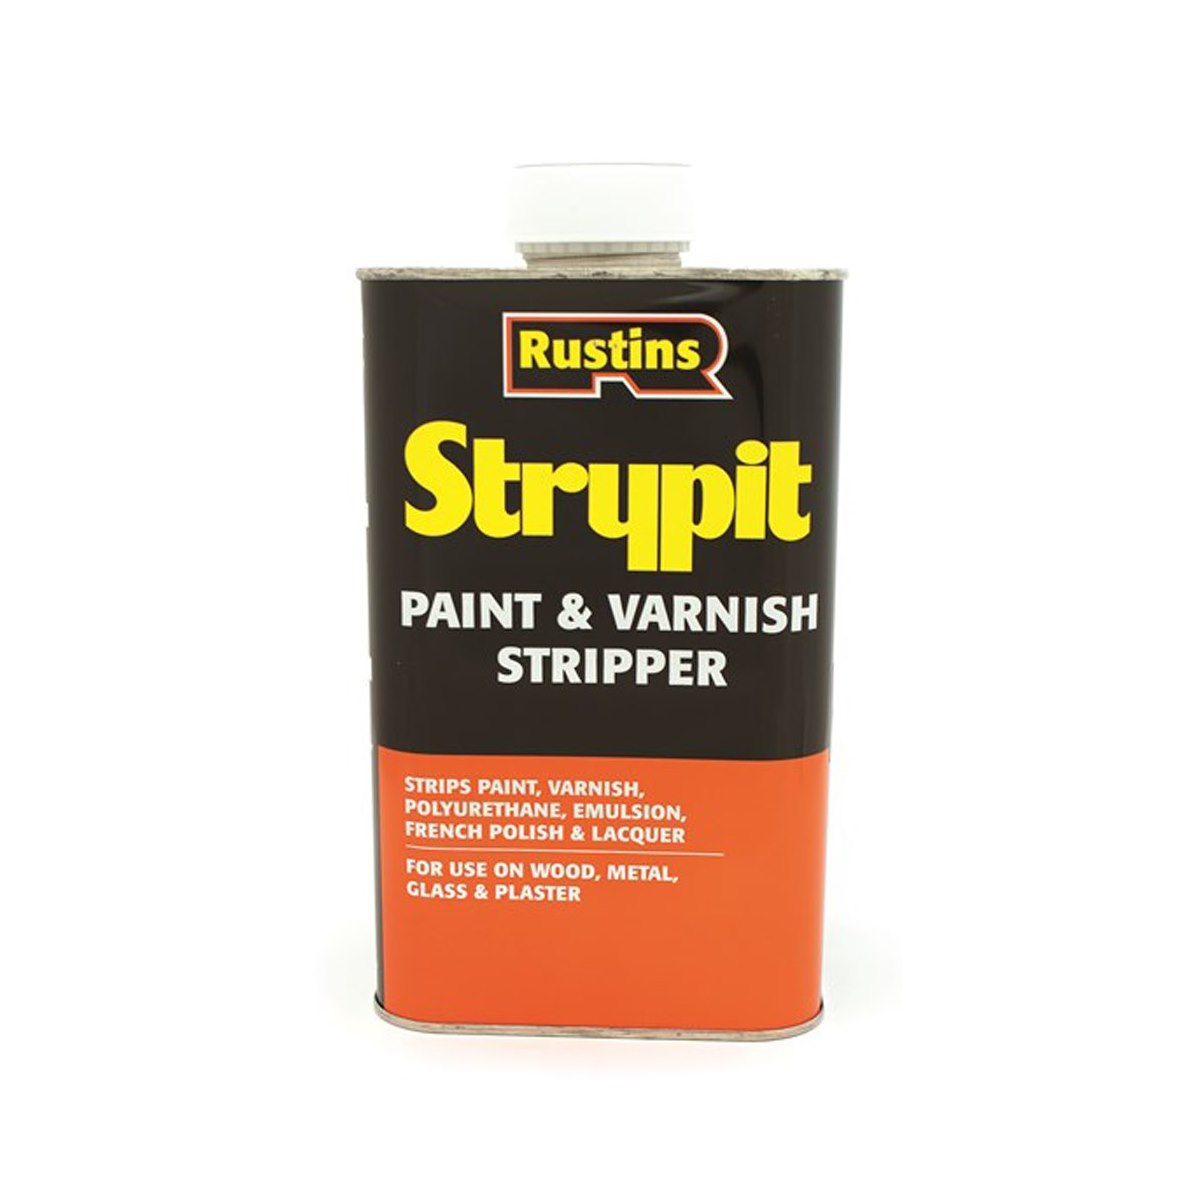 Rustins Strypit Paint and Varnish Stripper 1 Litre